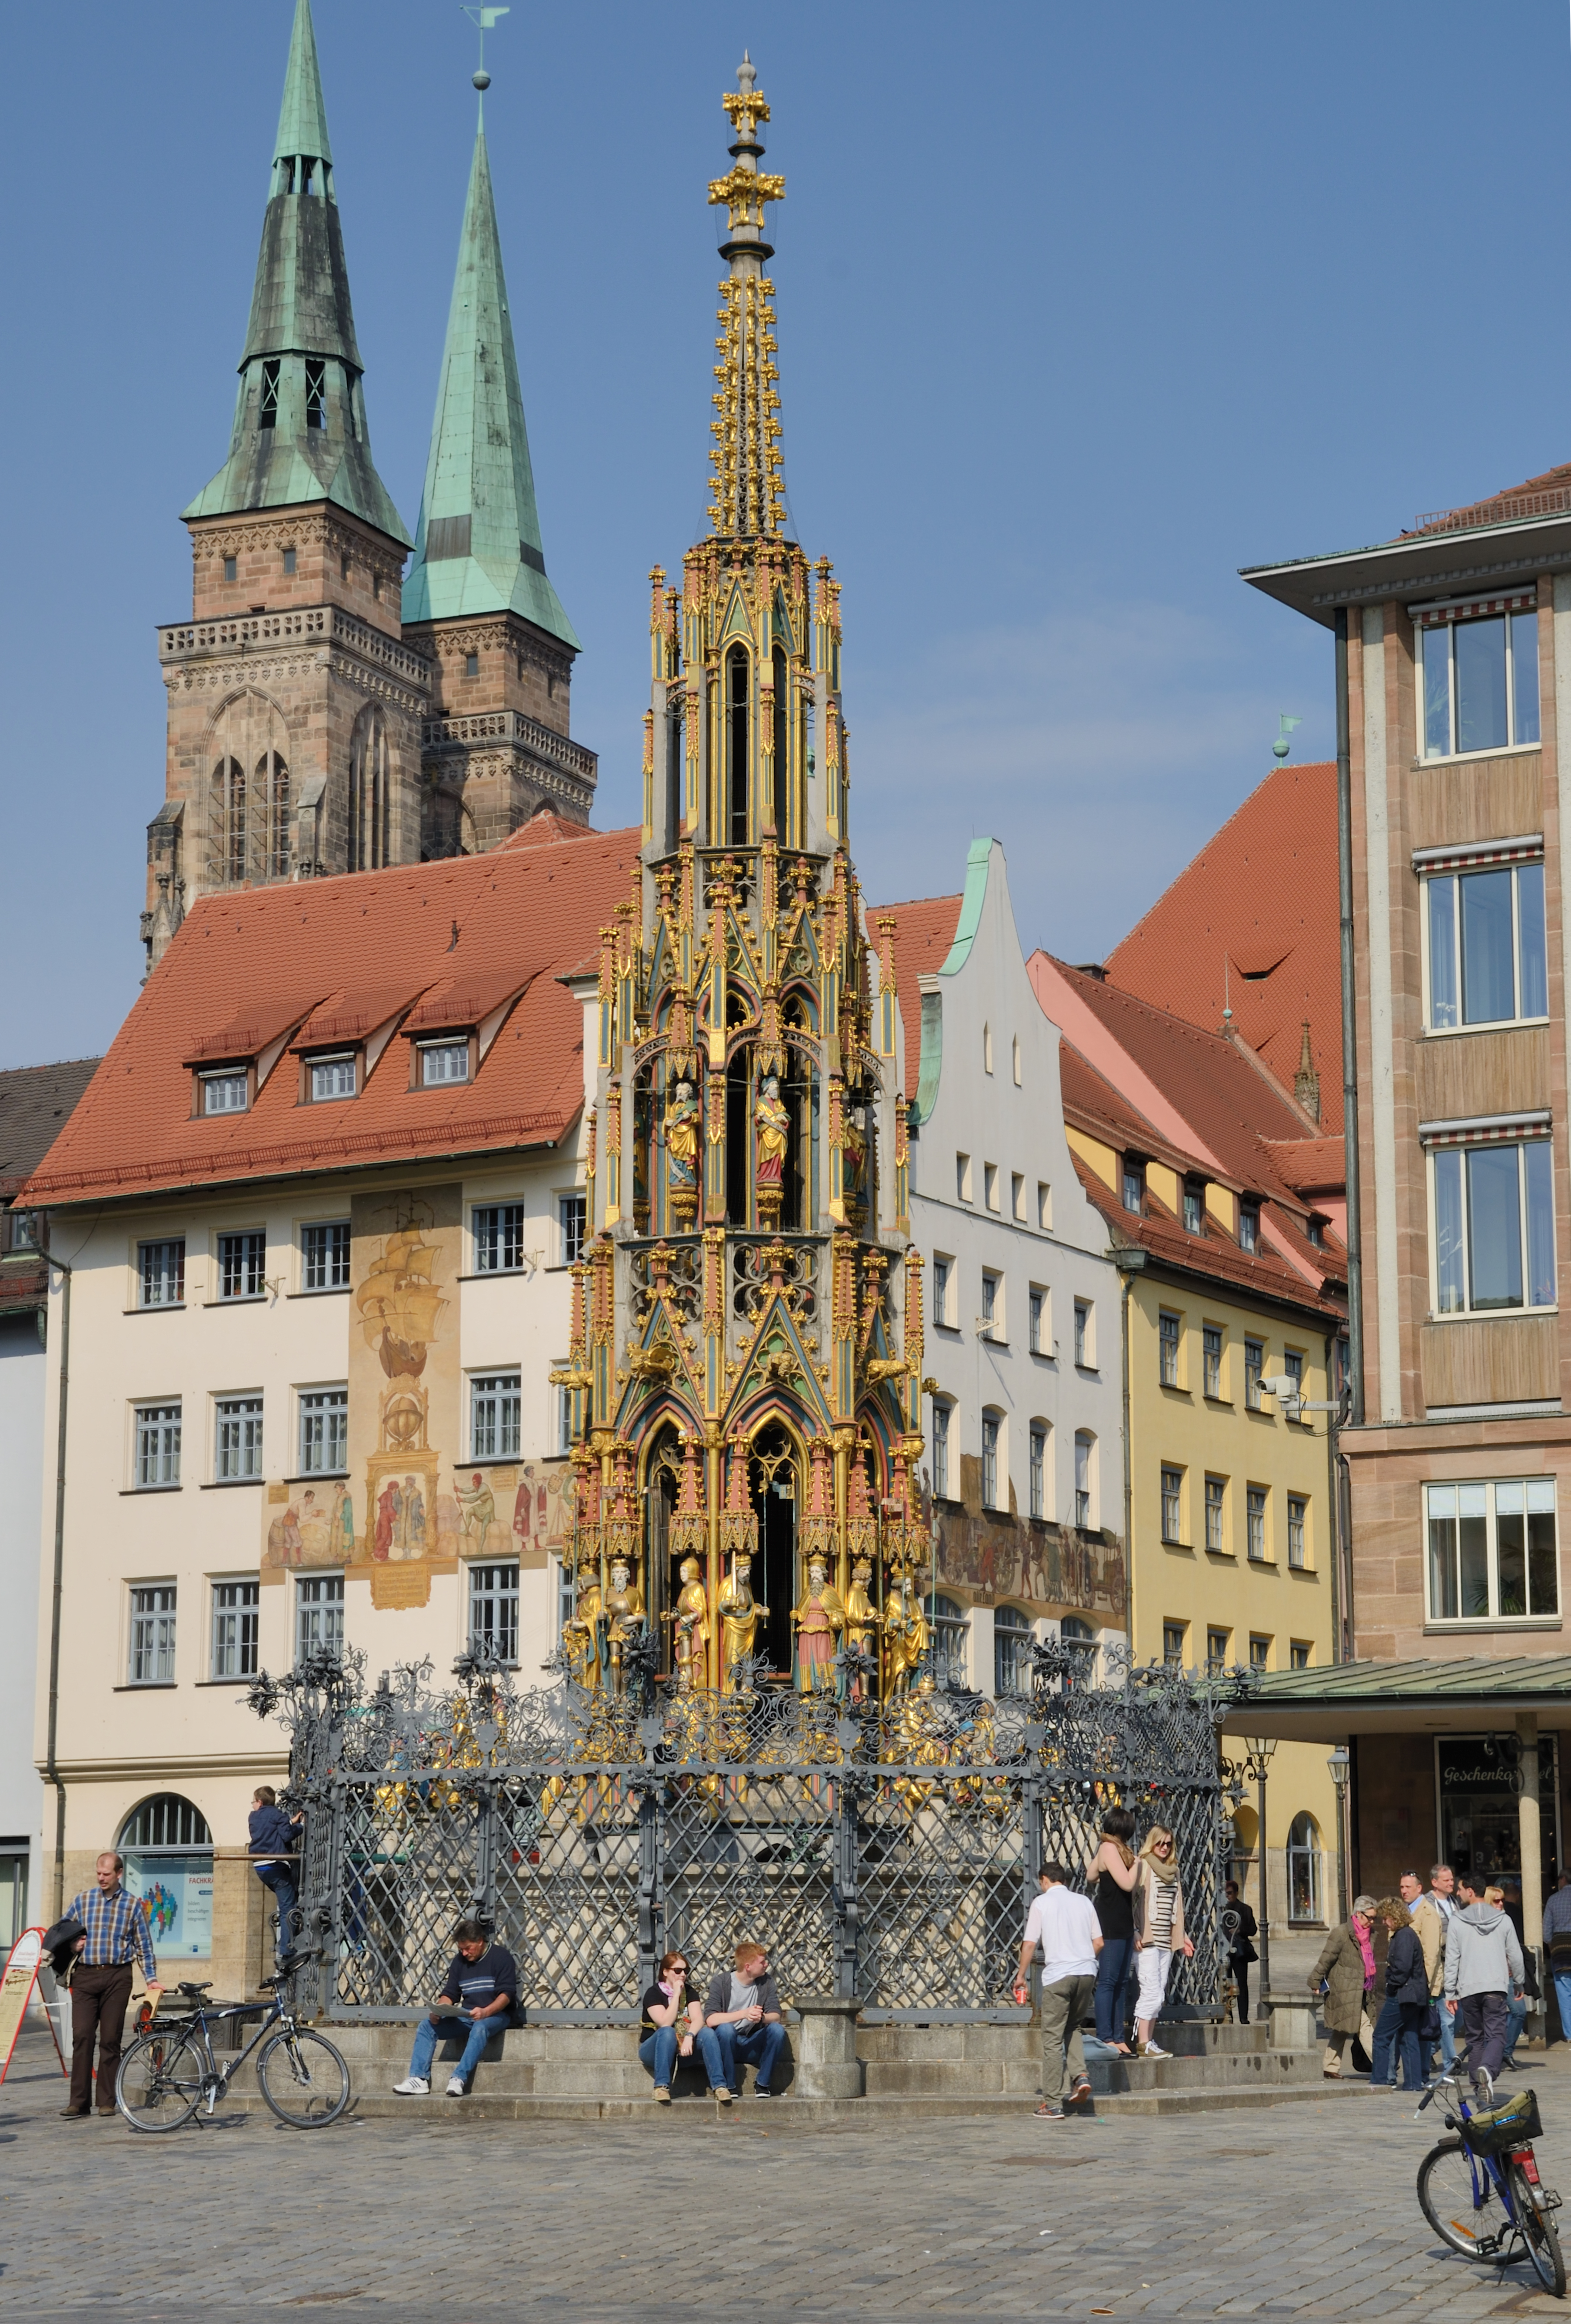 Nürnberg - Schöner Brunnen1.jpg. de:Abmahnung. de:Wikimedia Commons. 